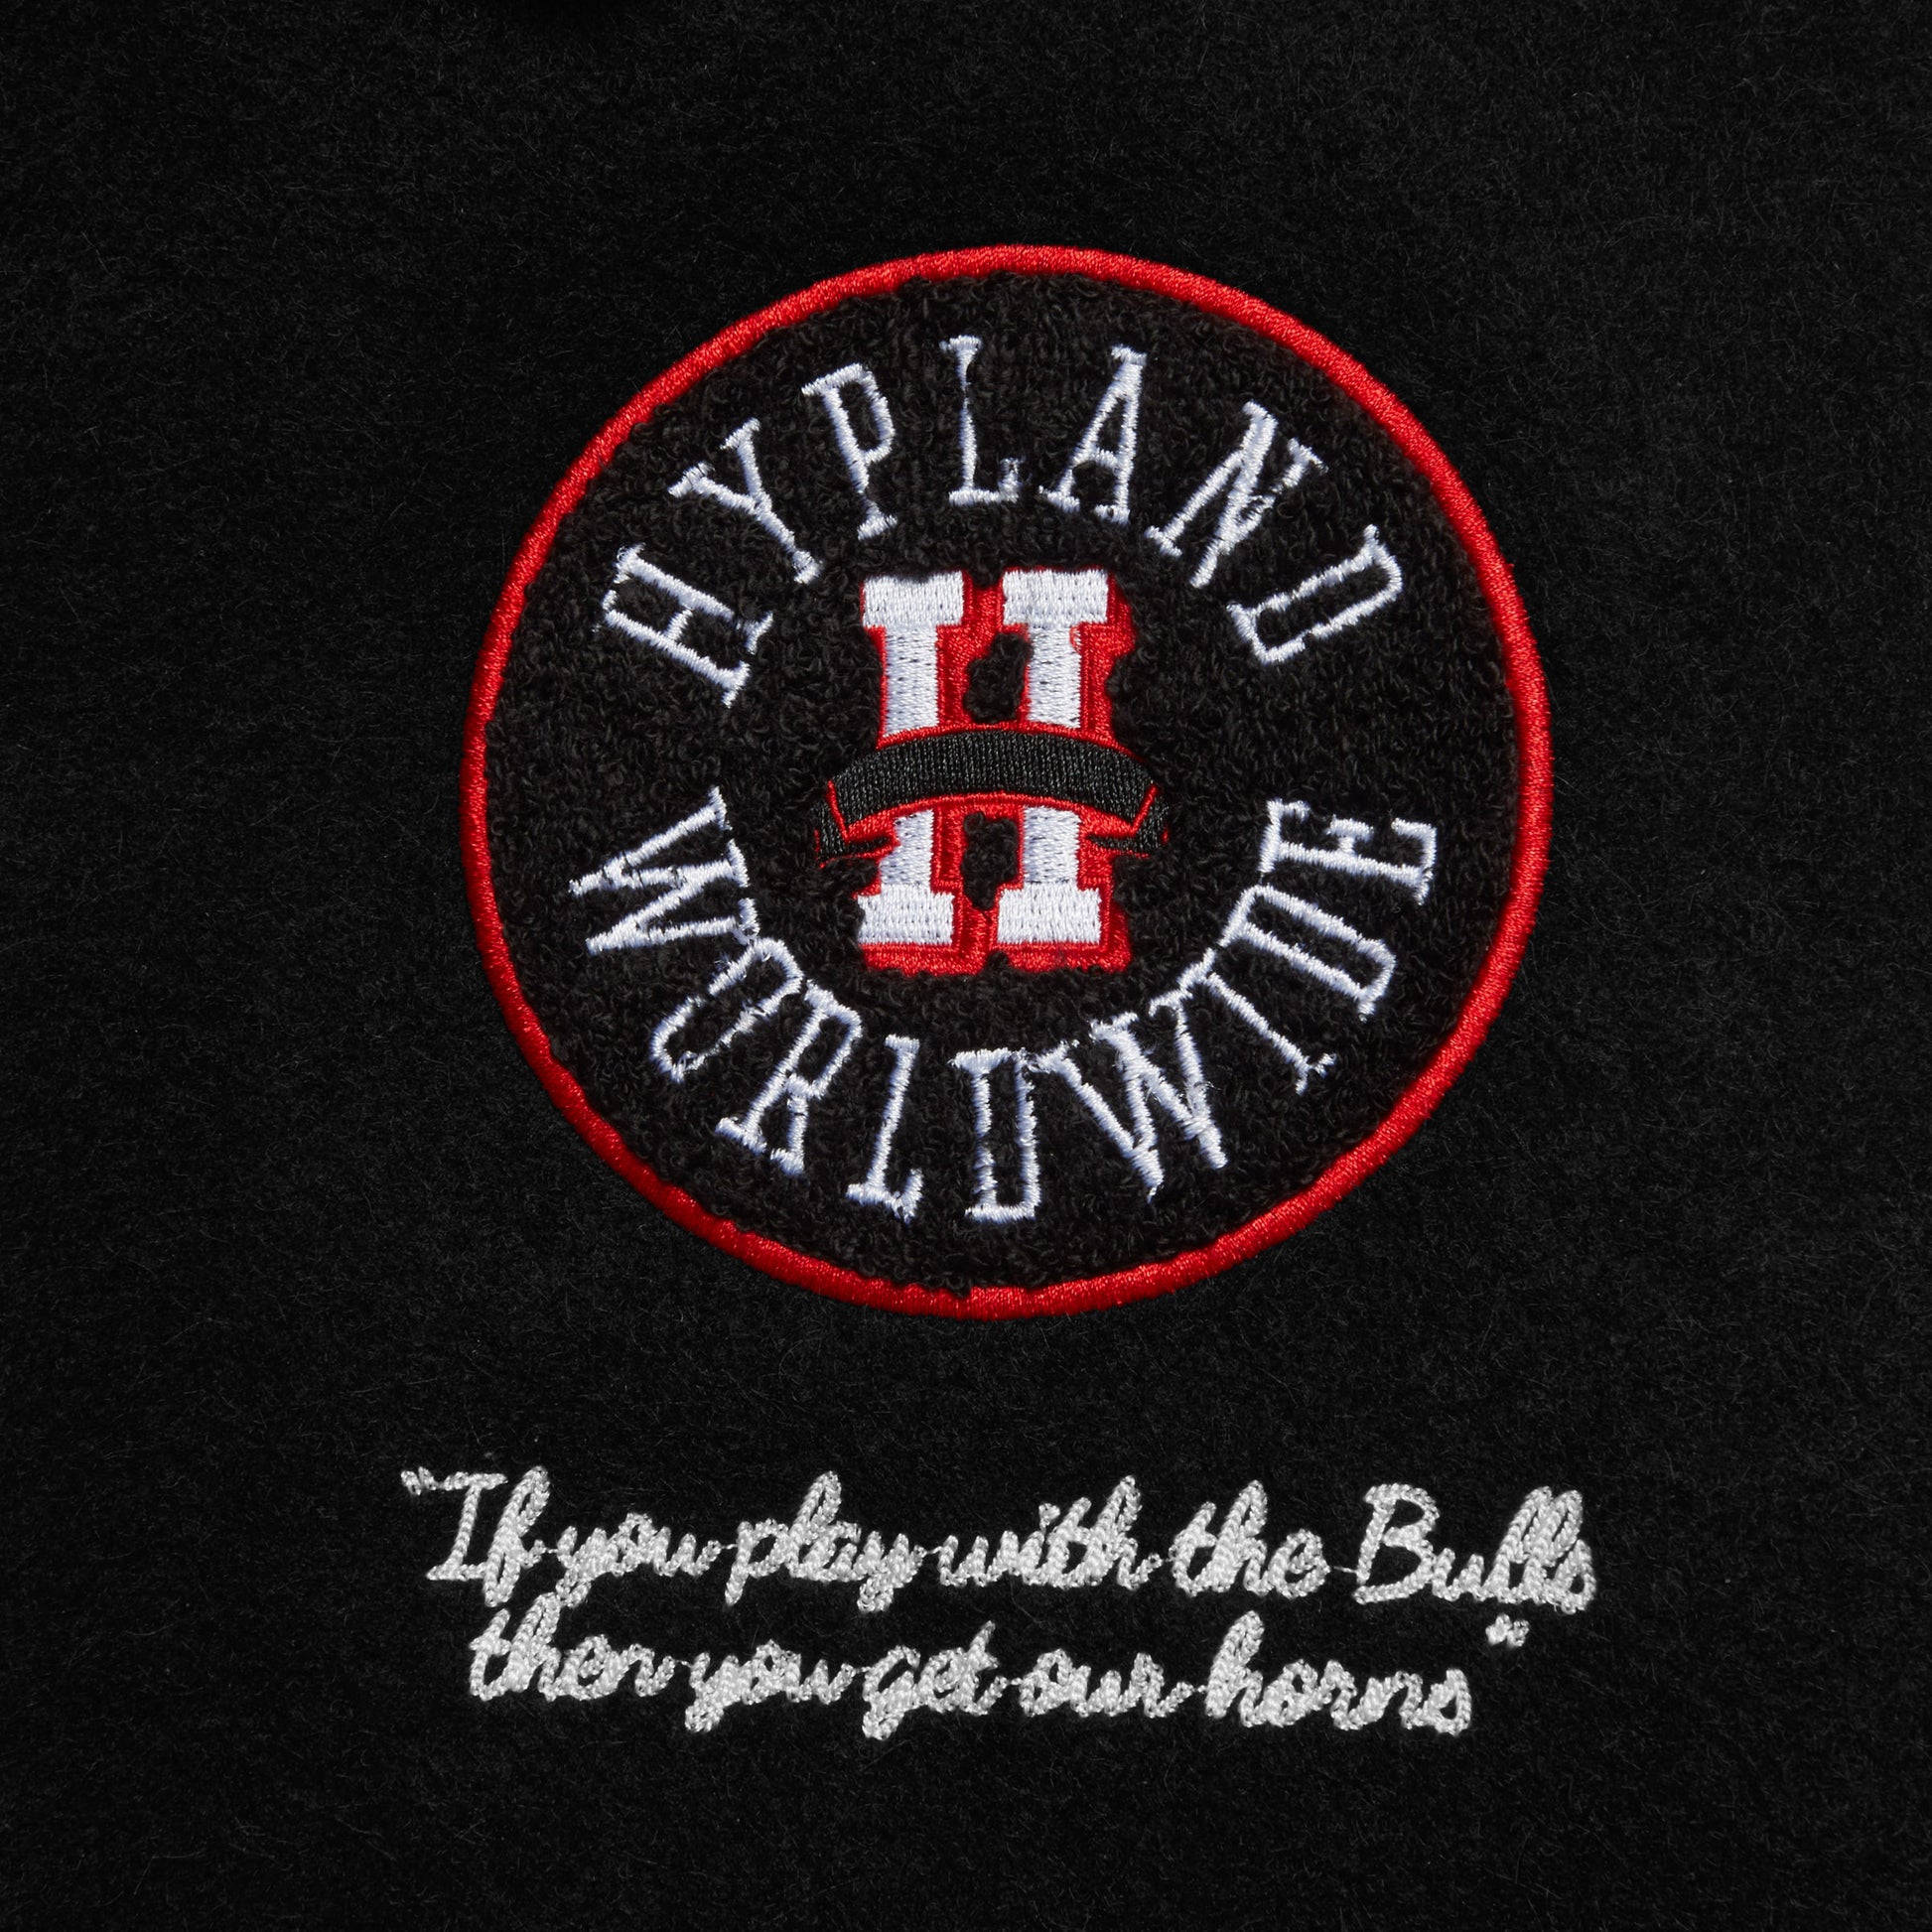 Hypland NBA Chicago Bulls Player Tshirt (Black) 3XL